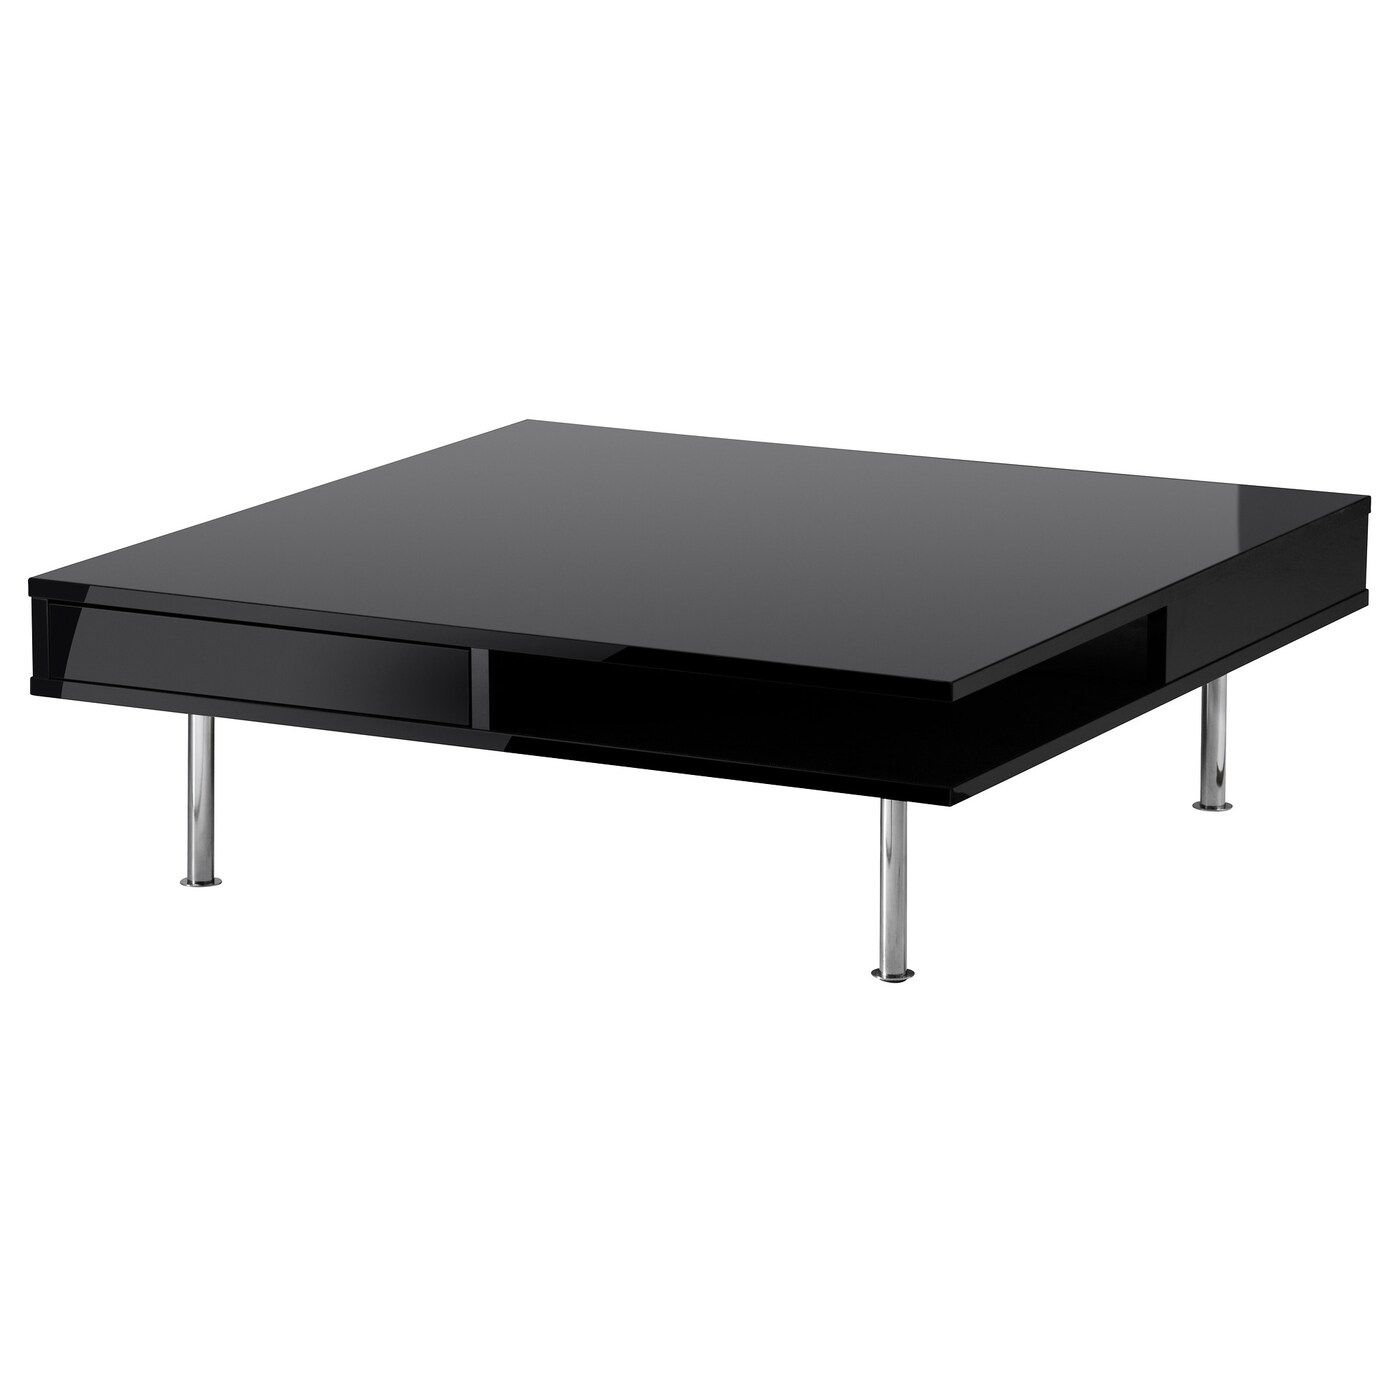 Tofteryd Coffee Table, High Gloss Black, 95x95 Cm – Ikea Intended For High Gloss Black Coffee Tables (Gallery 9 of 20)